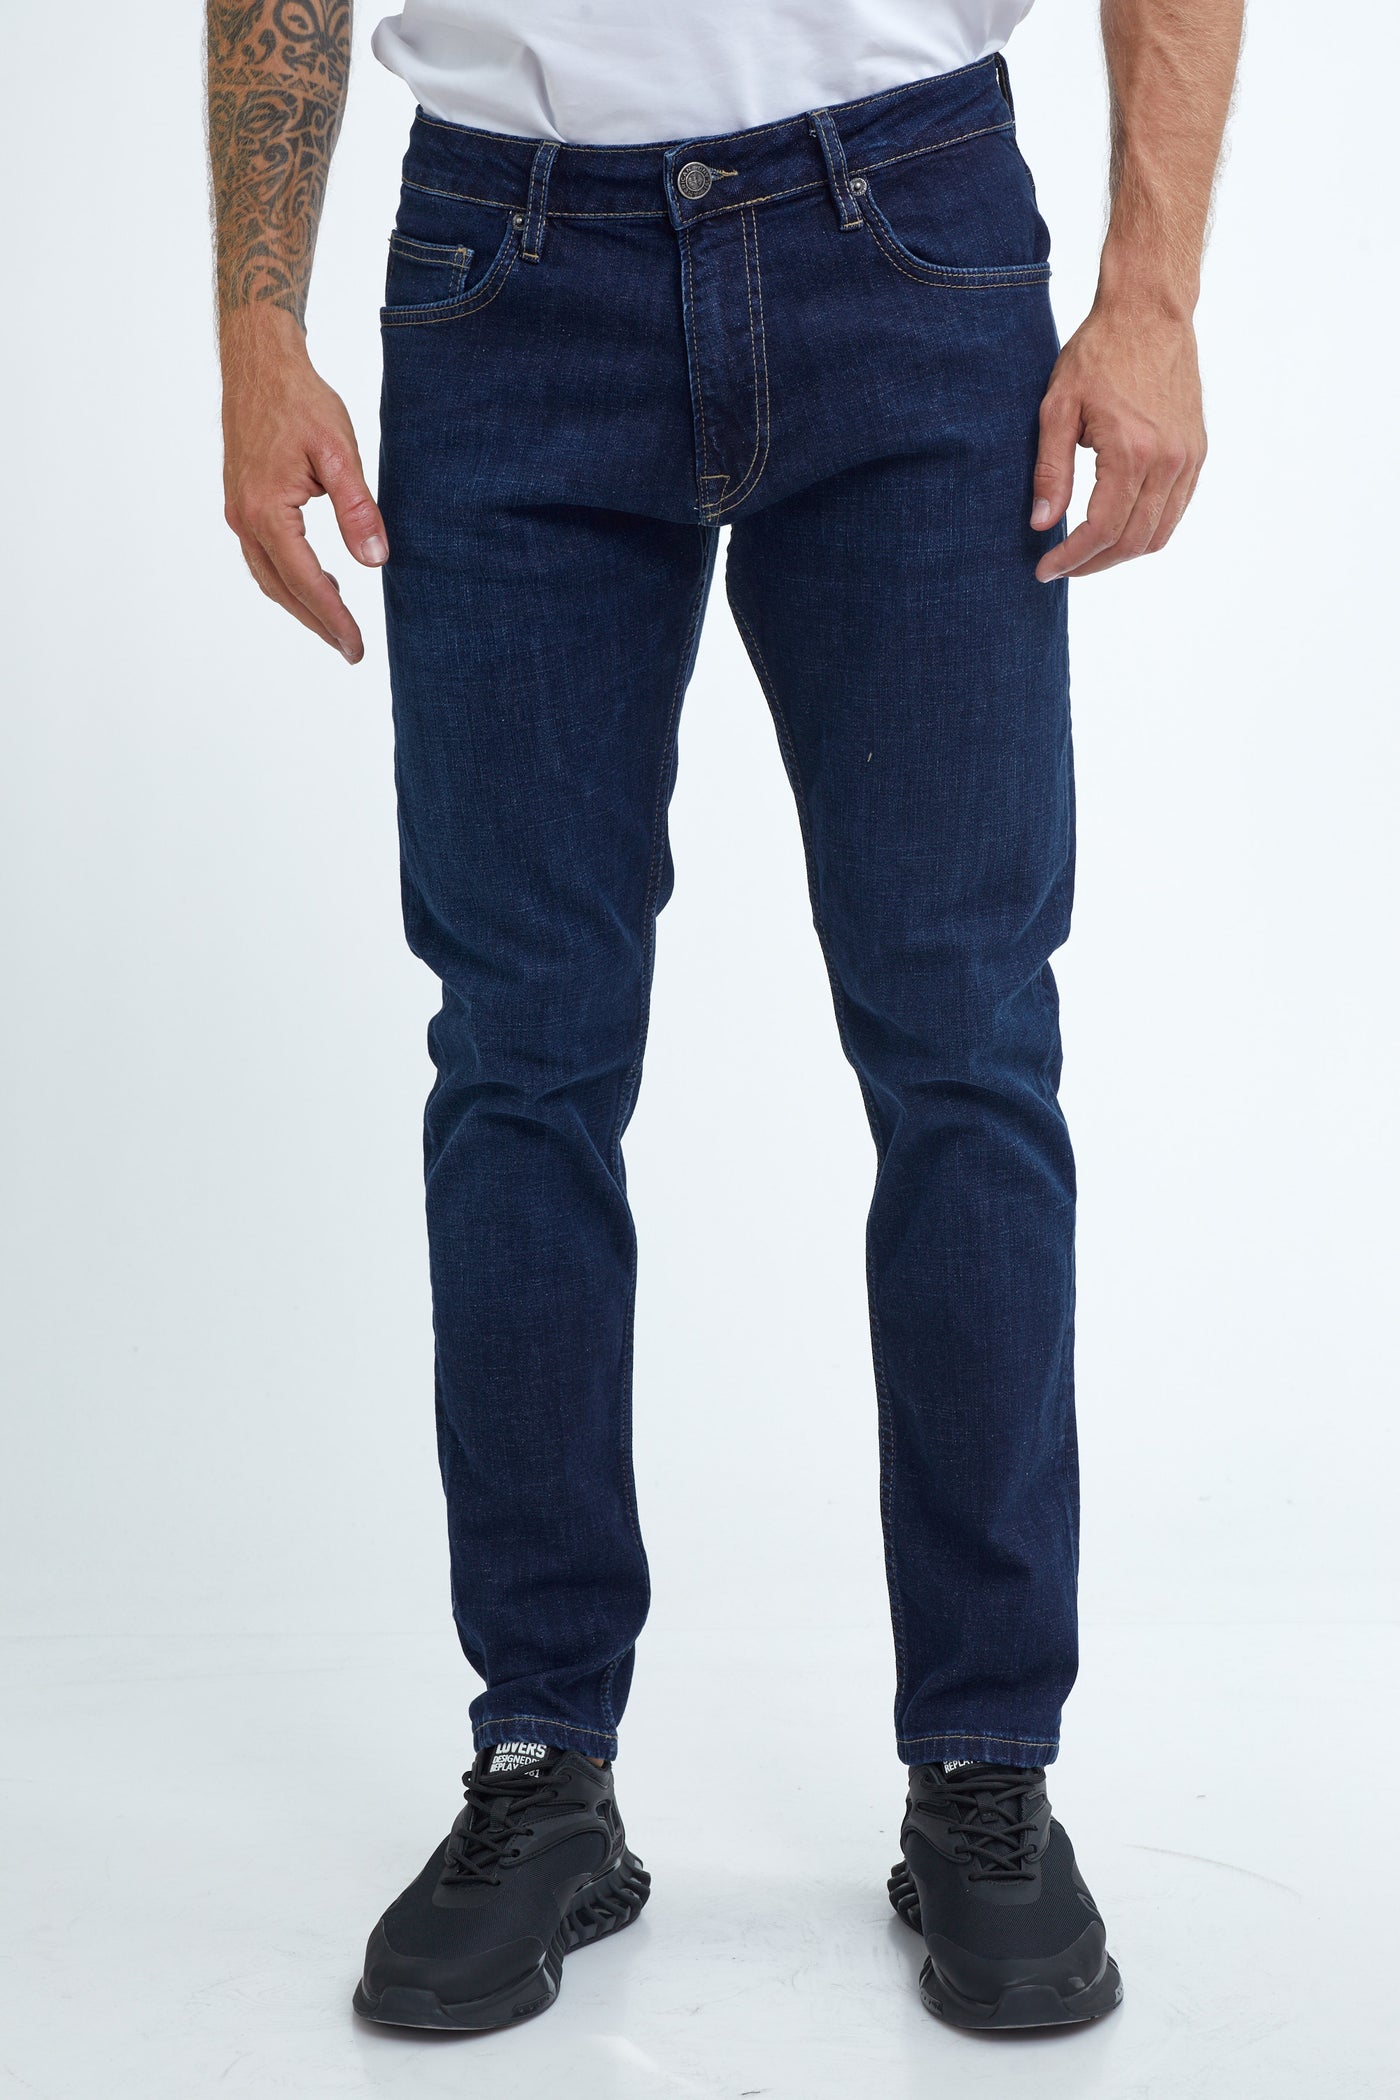 מכנס ג'ינס סלים כחול כהה